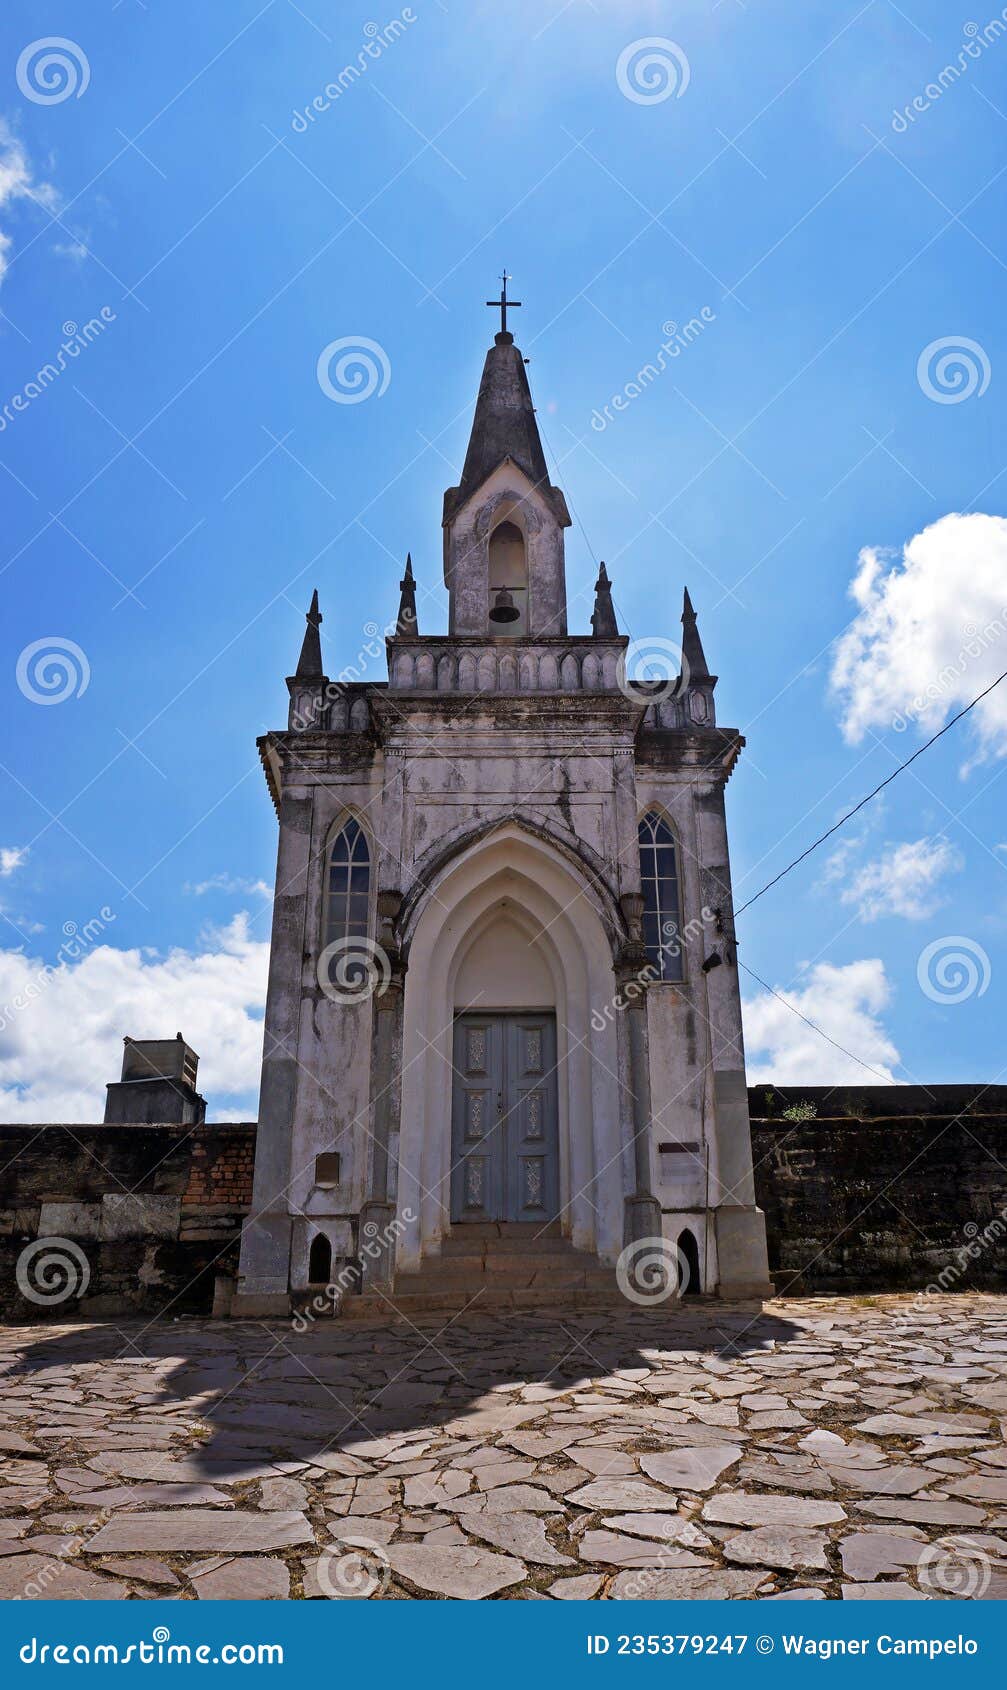 chapel in neo gothic style, serro, minas gerais, brazil